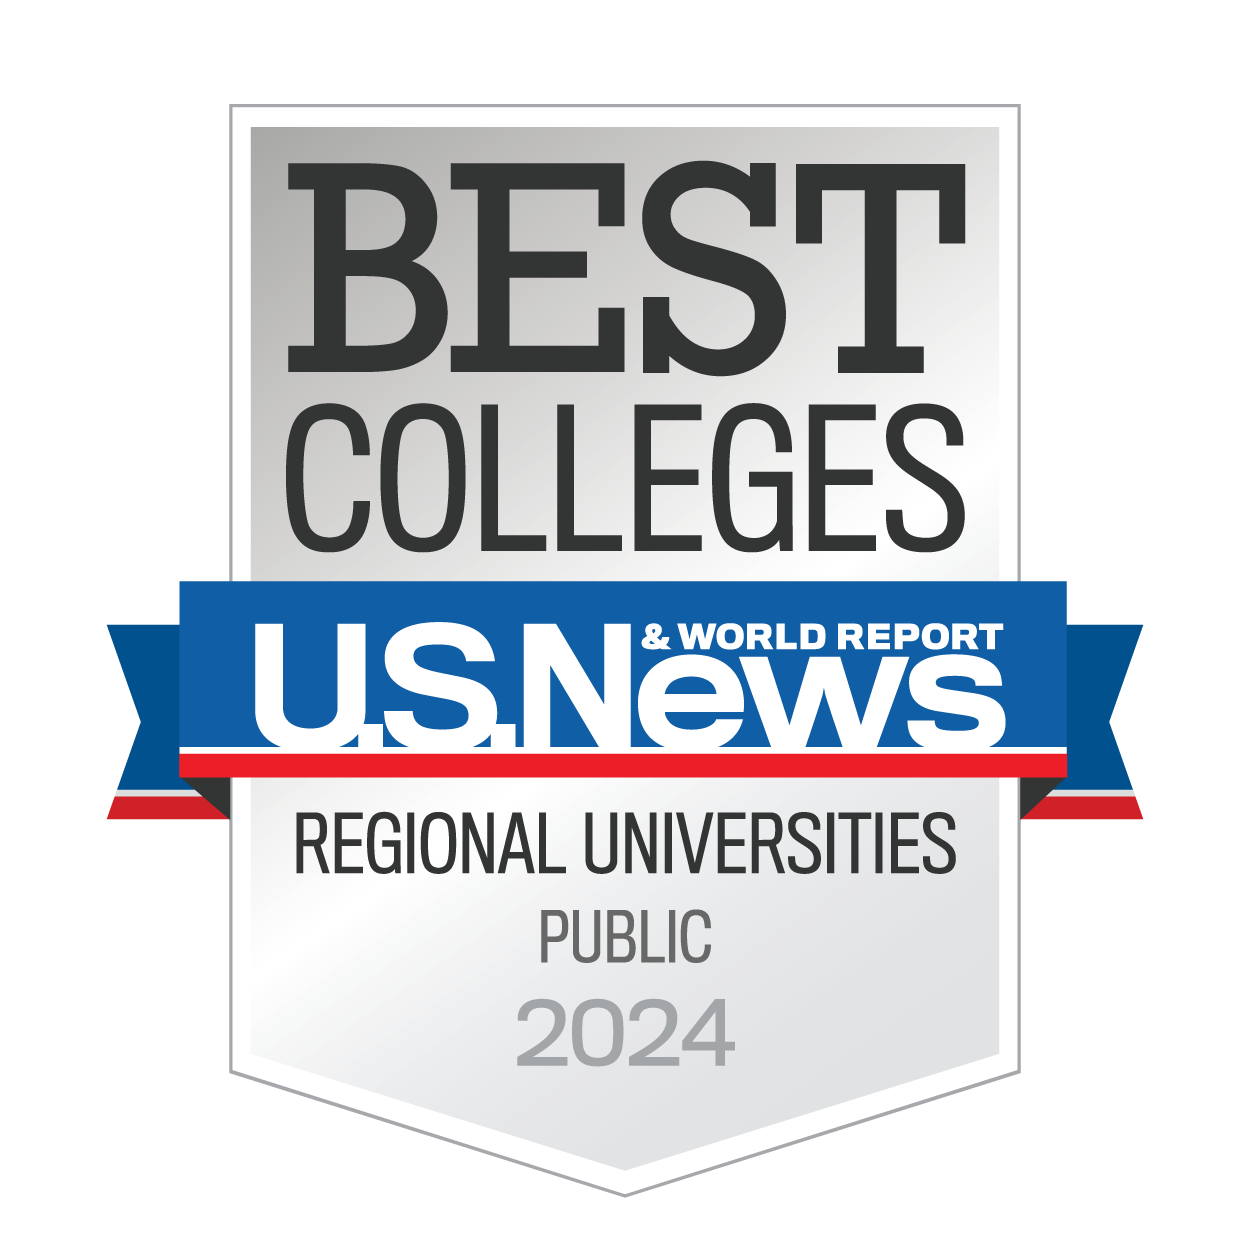 Best Colleges U.S. News and World Report - Regional Universities Public 2024